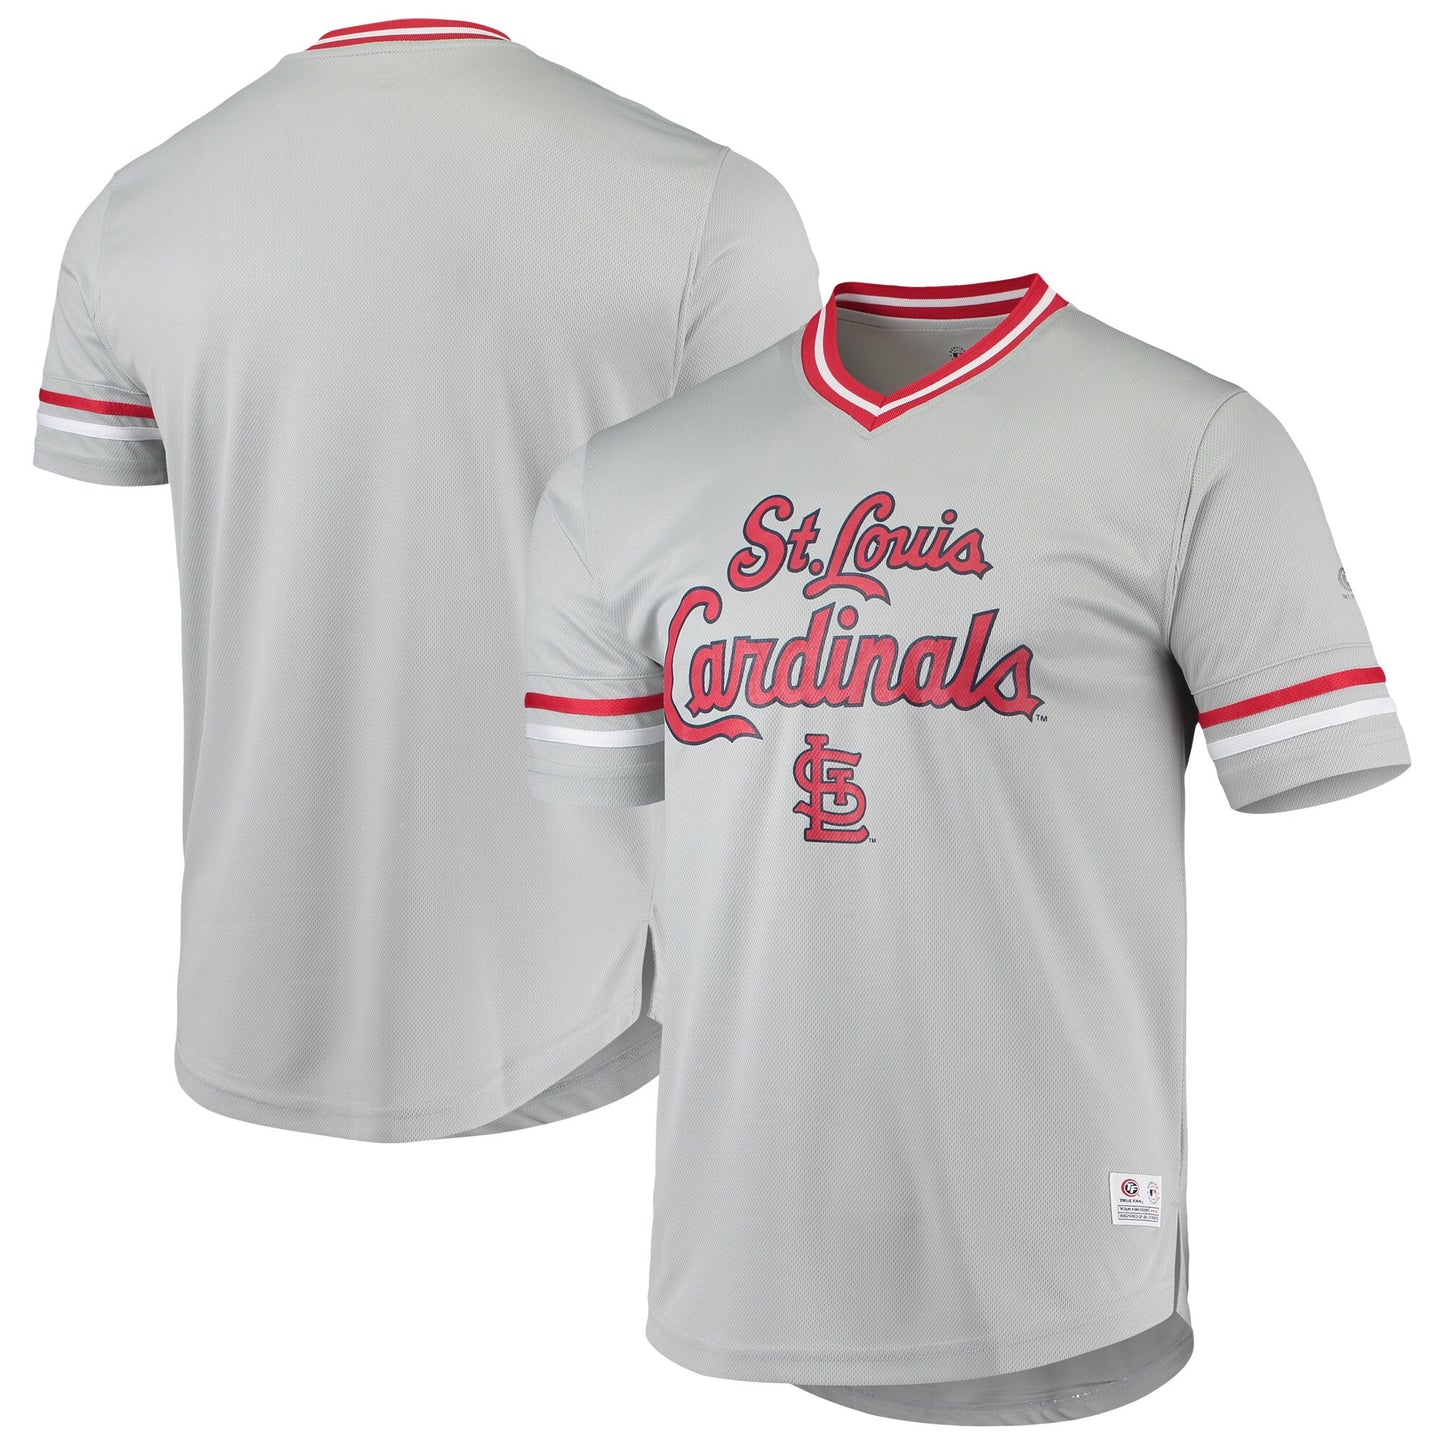 Men's Gray St. Louis Cardinals Replica V-Neck Jersey